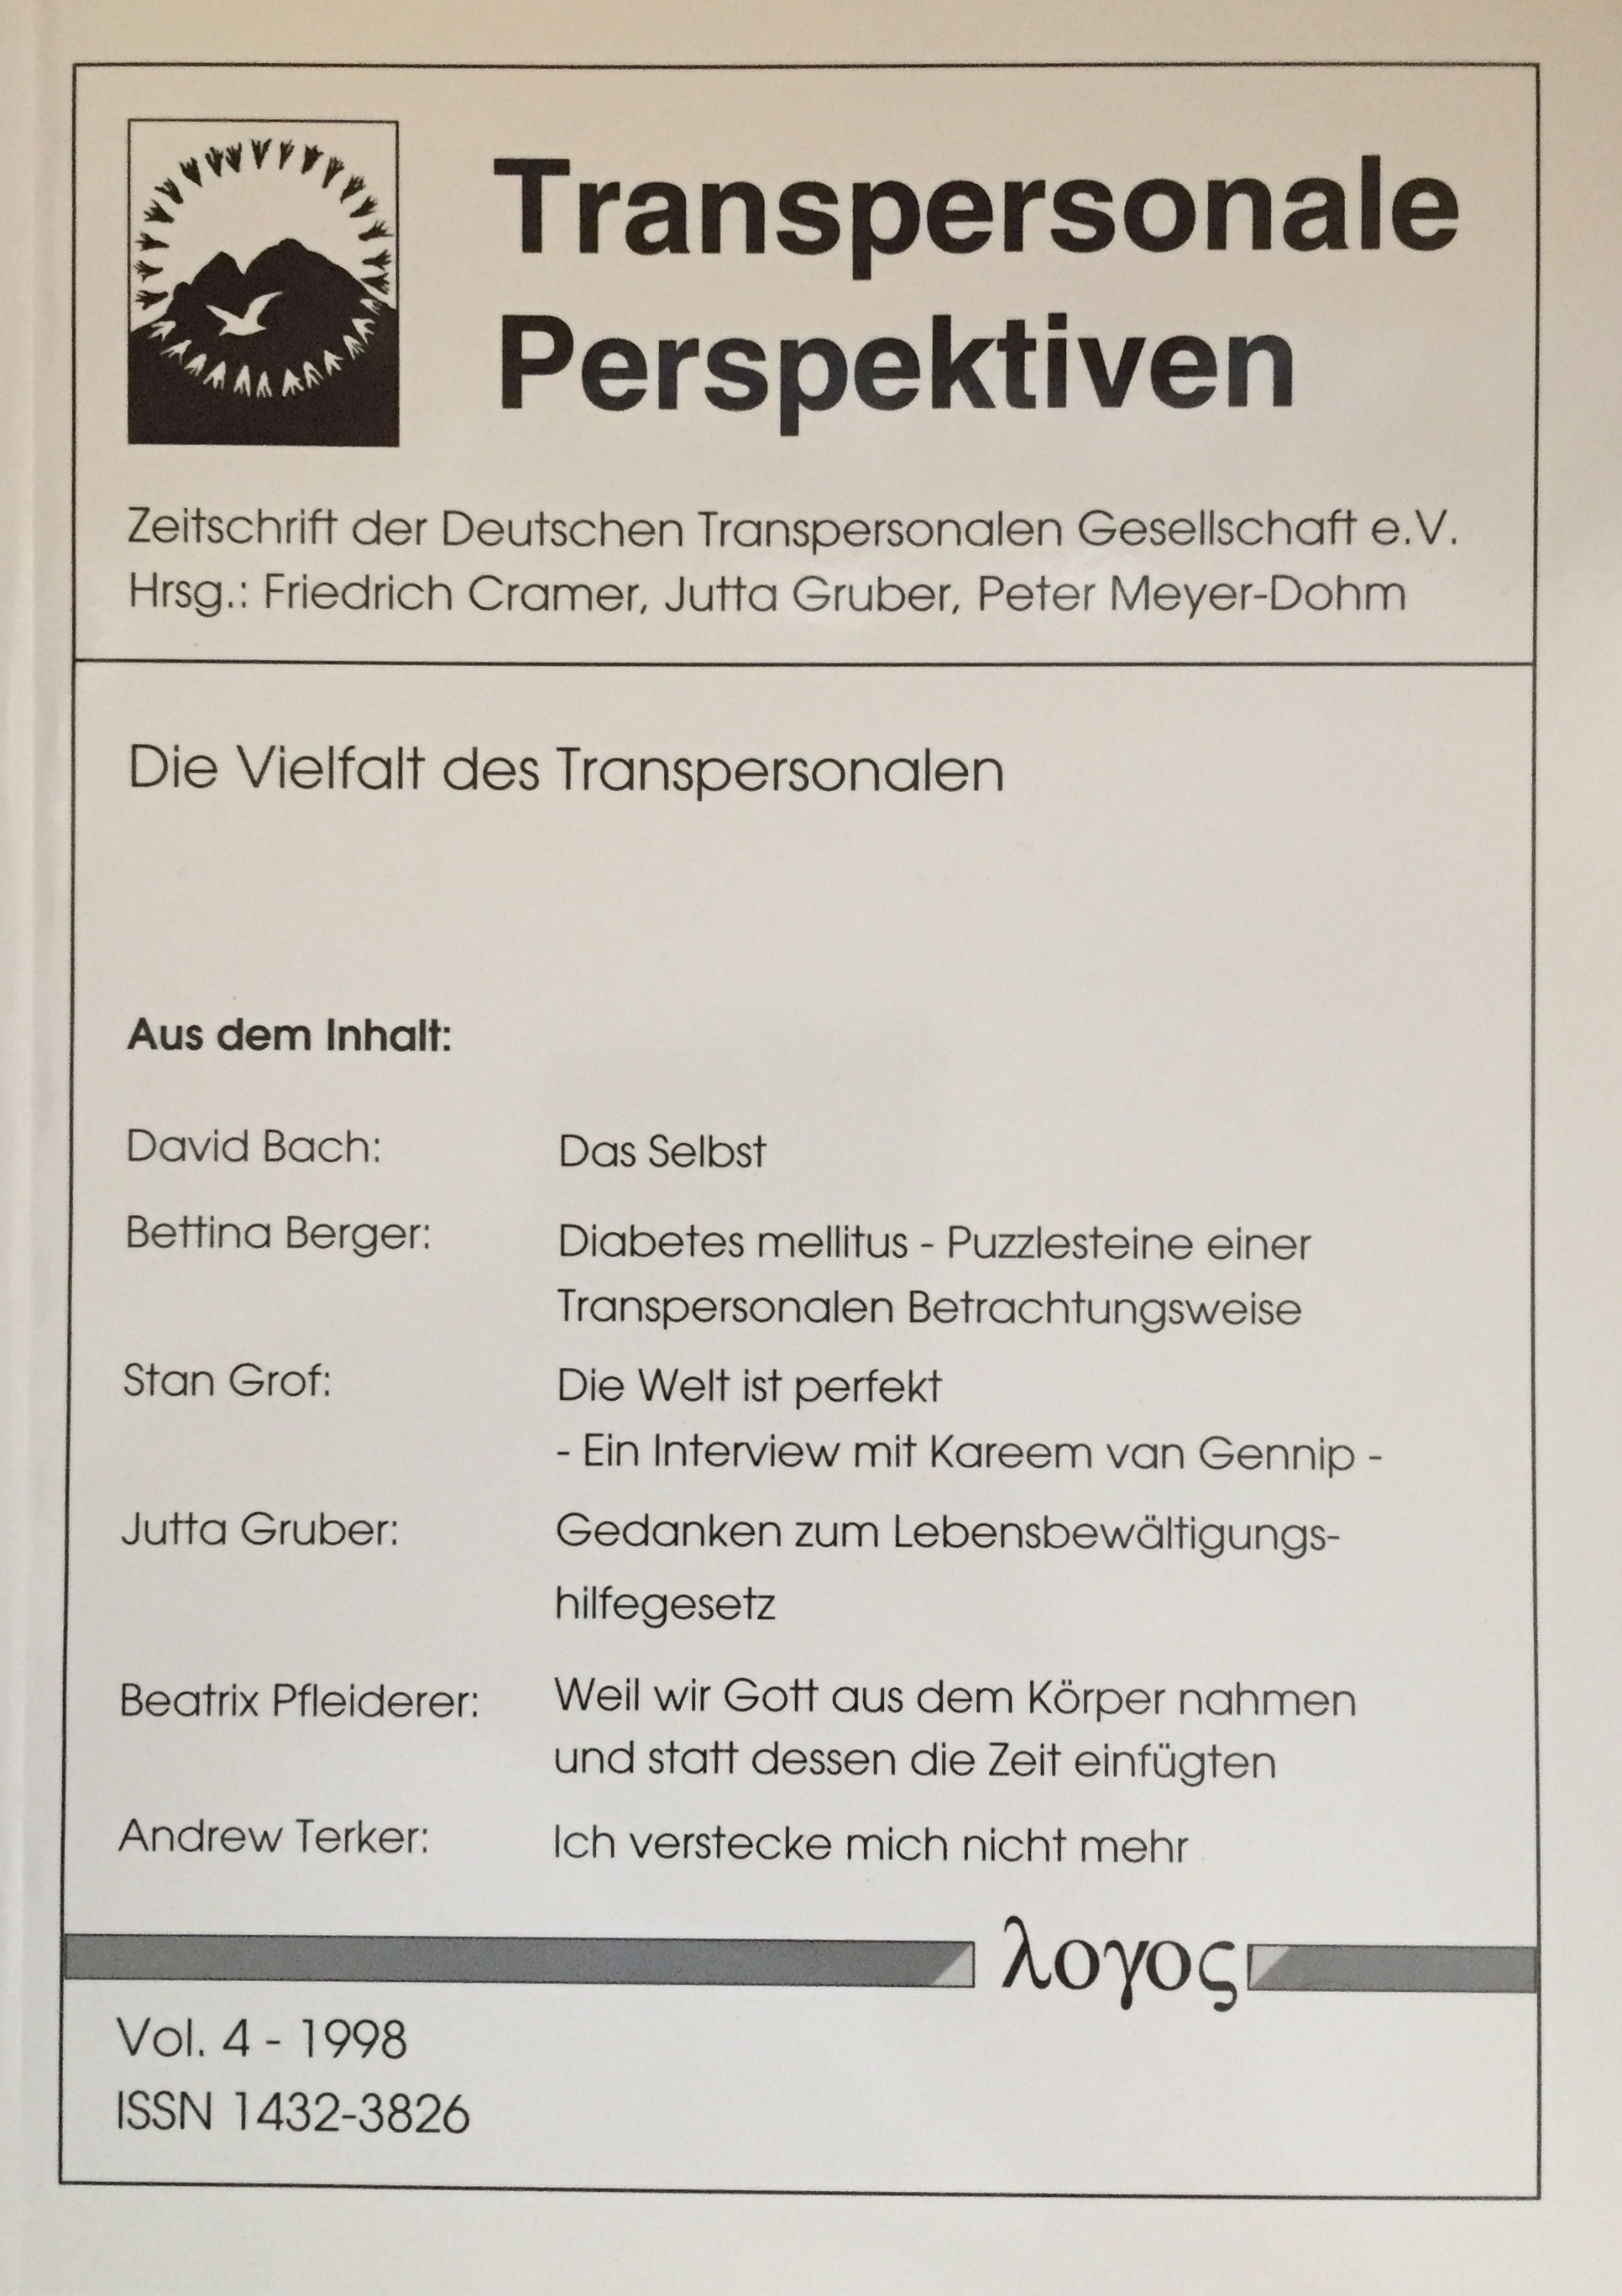 Transpersonale Perspektiven Volume 4/1998